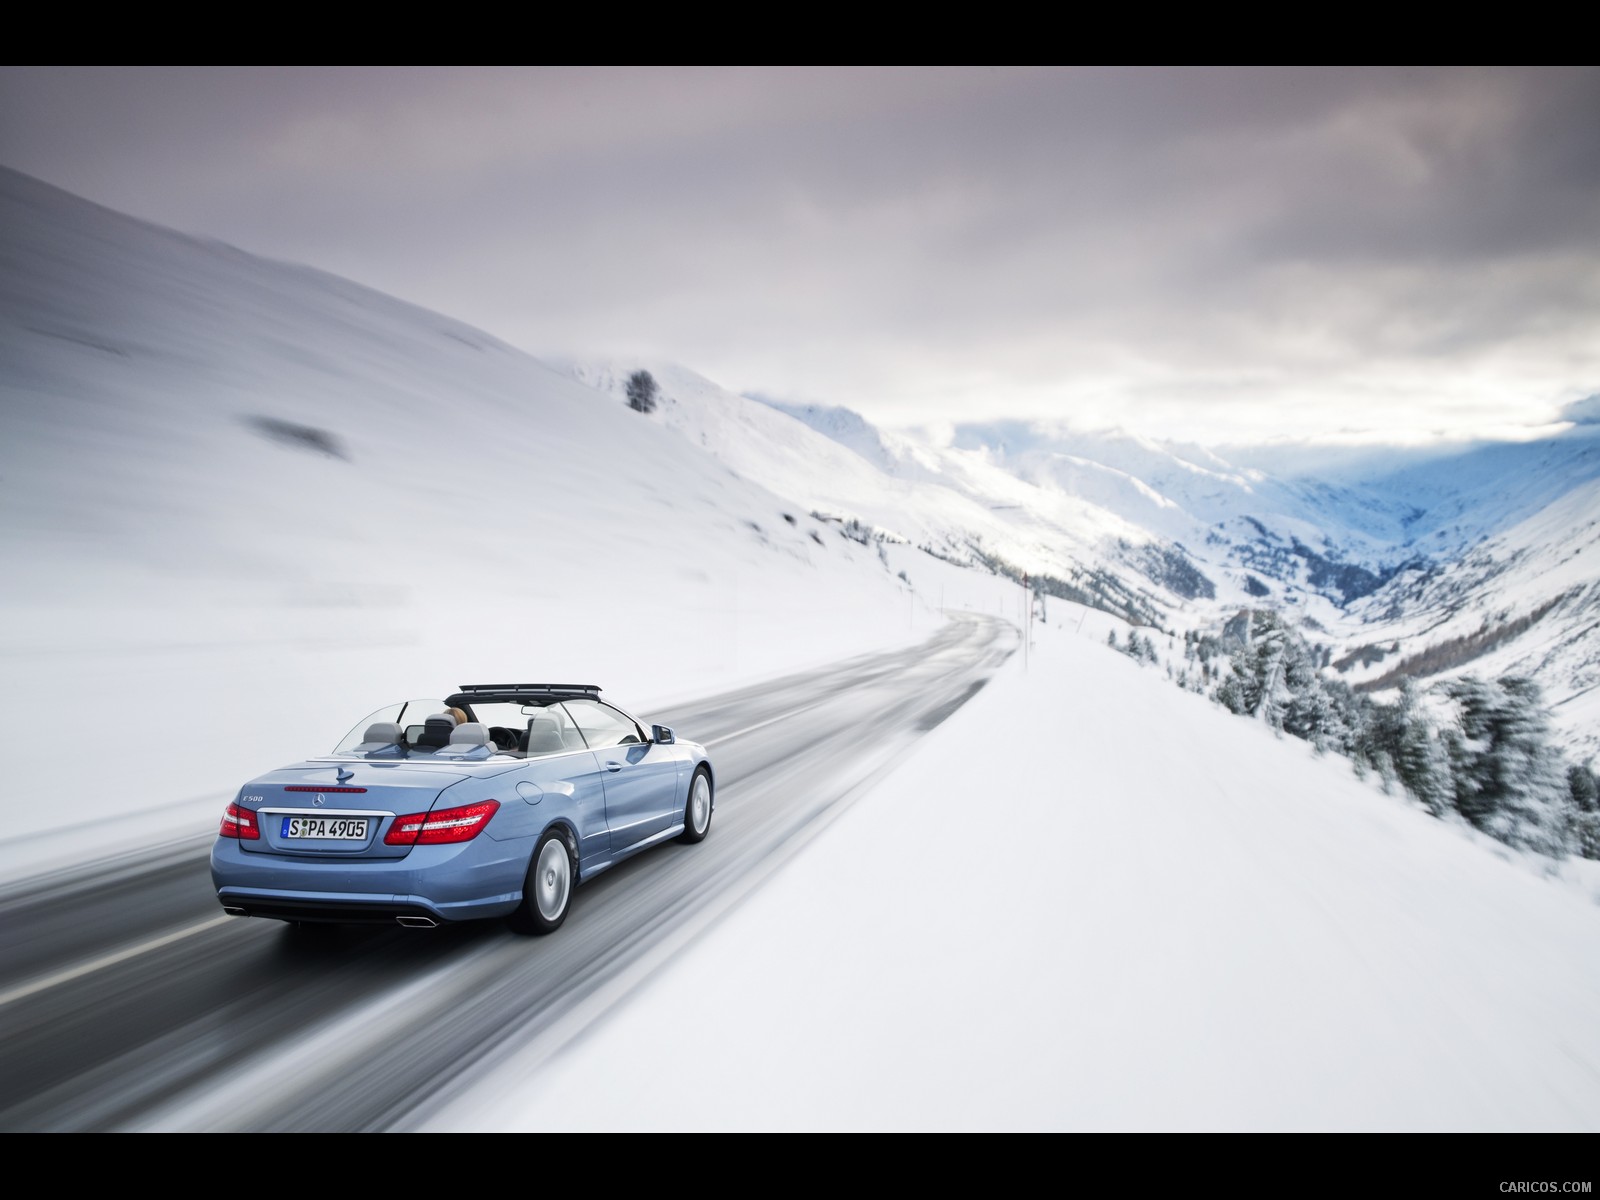 Mercedes-Benz E-Class Cabriolet - On Snow - , #90 of 165